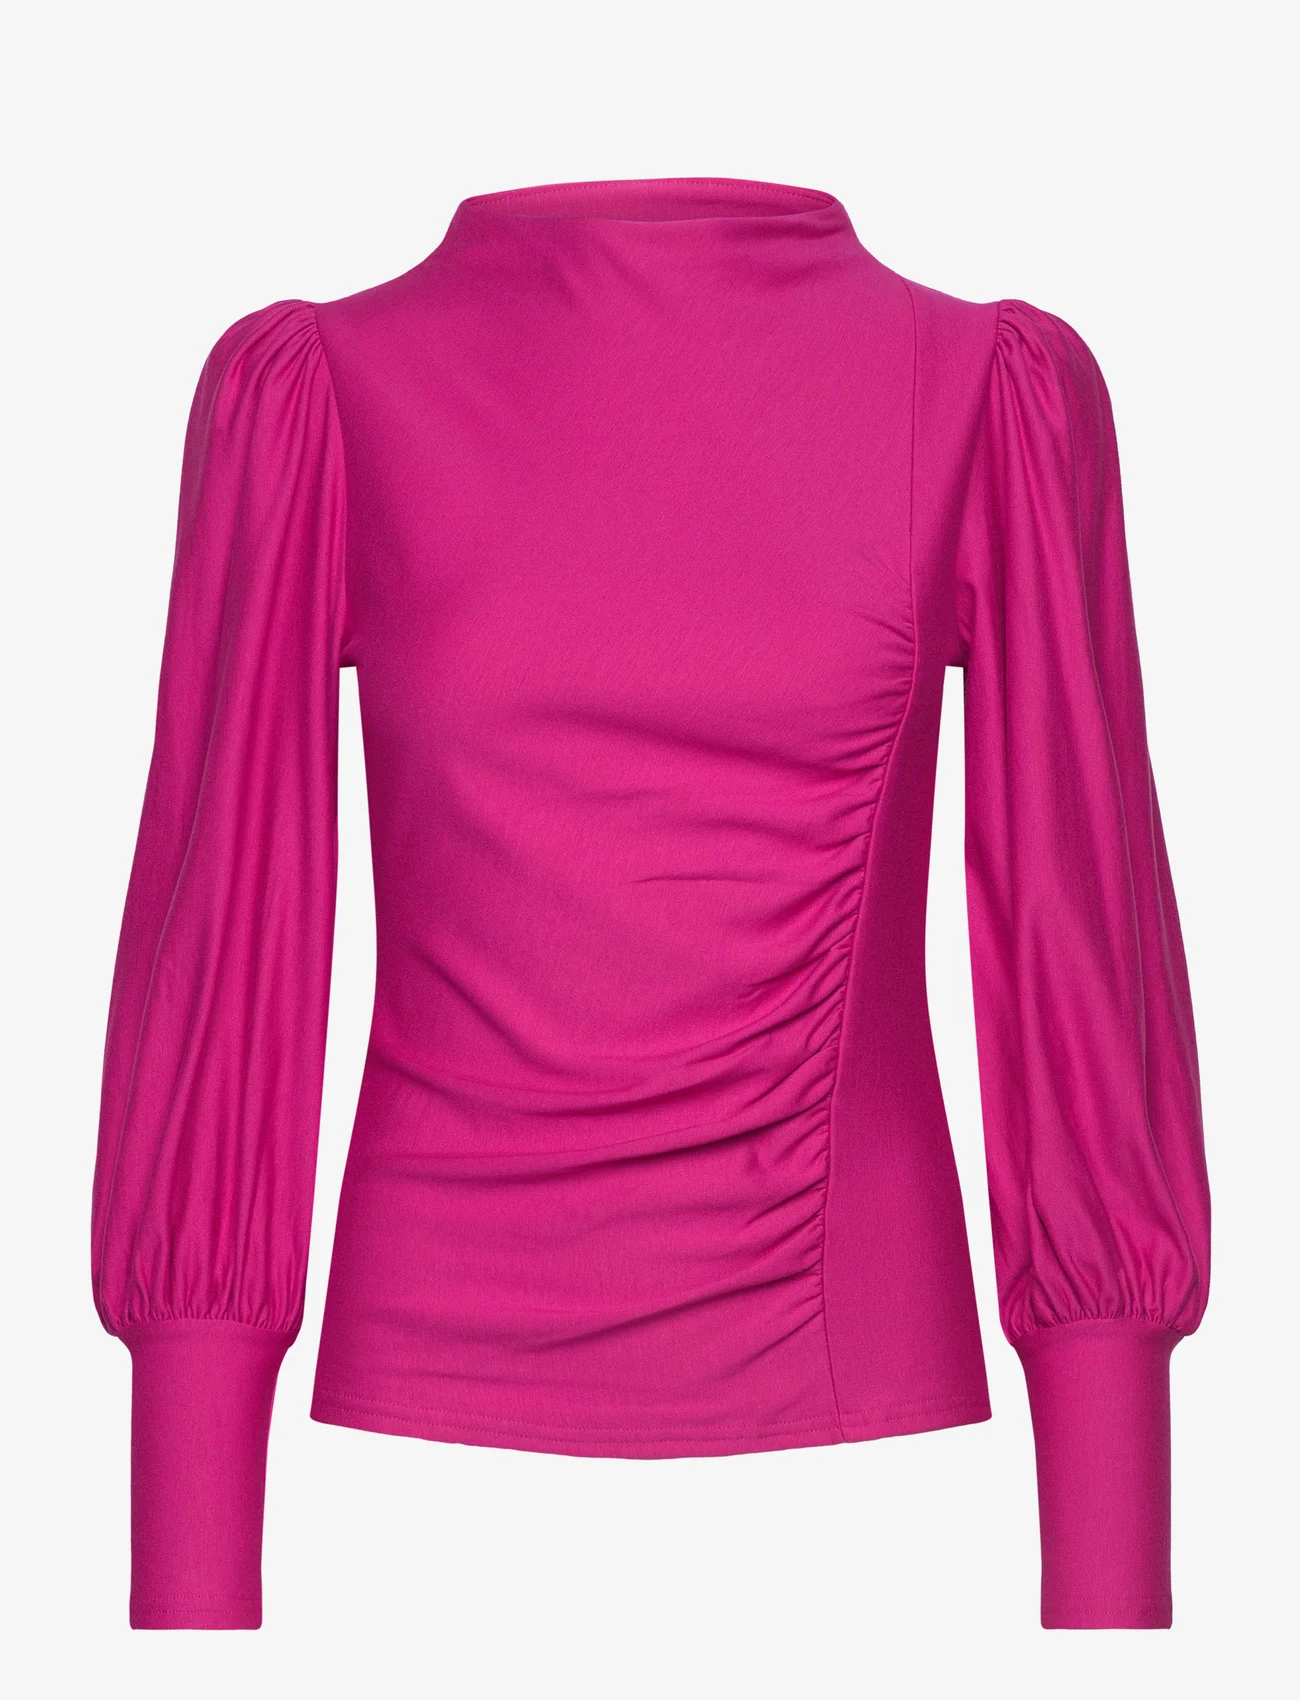 Gestuz - RifaGZ puff blouse - long sleeved blouses - intense pink - 0